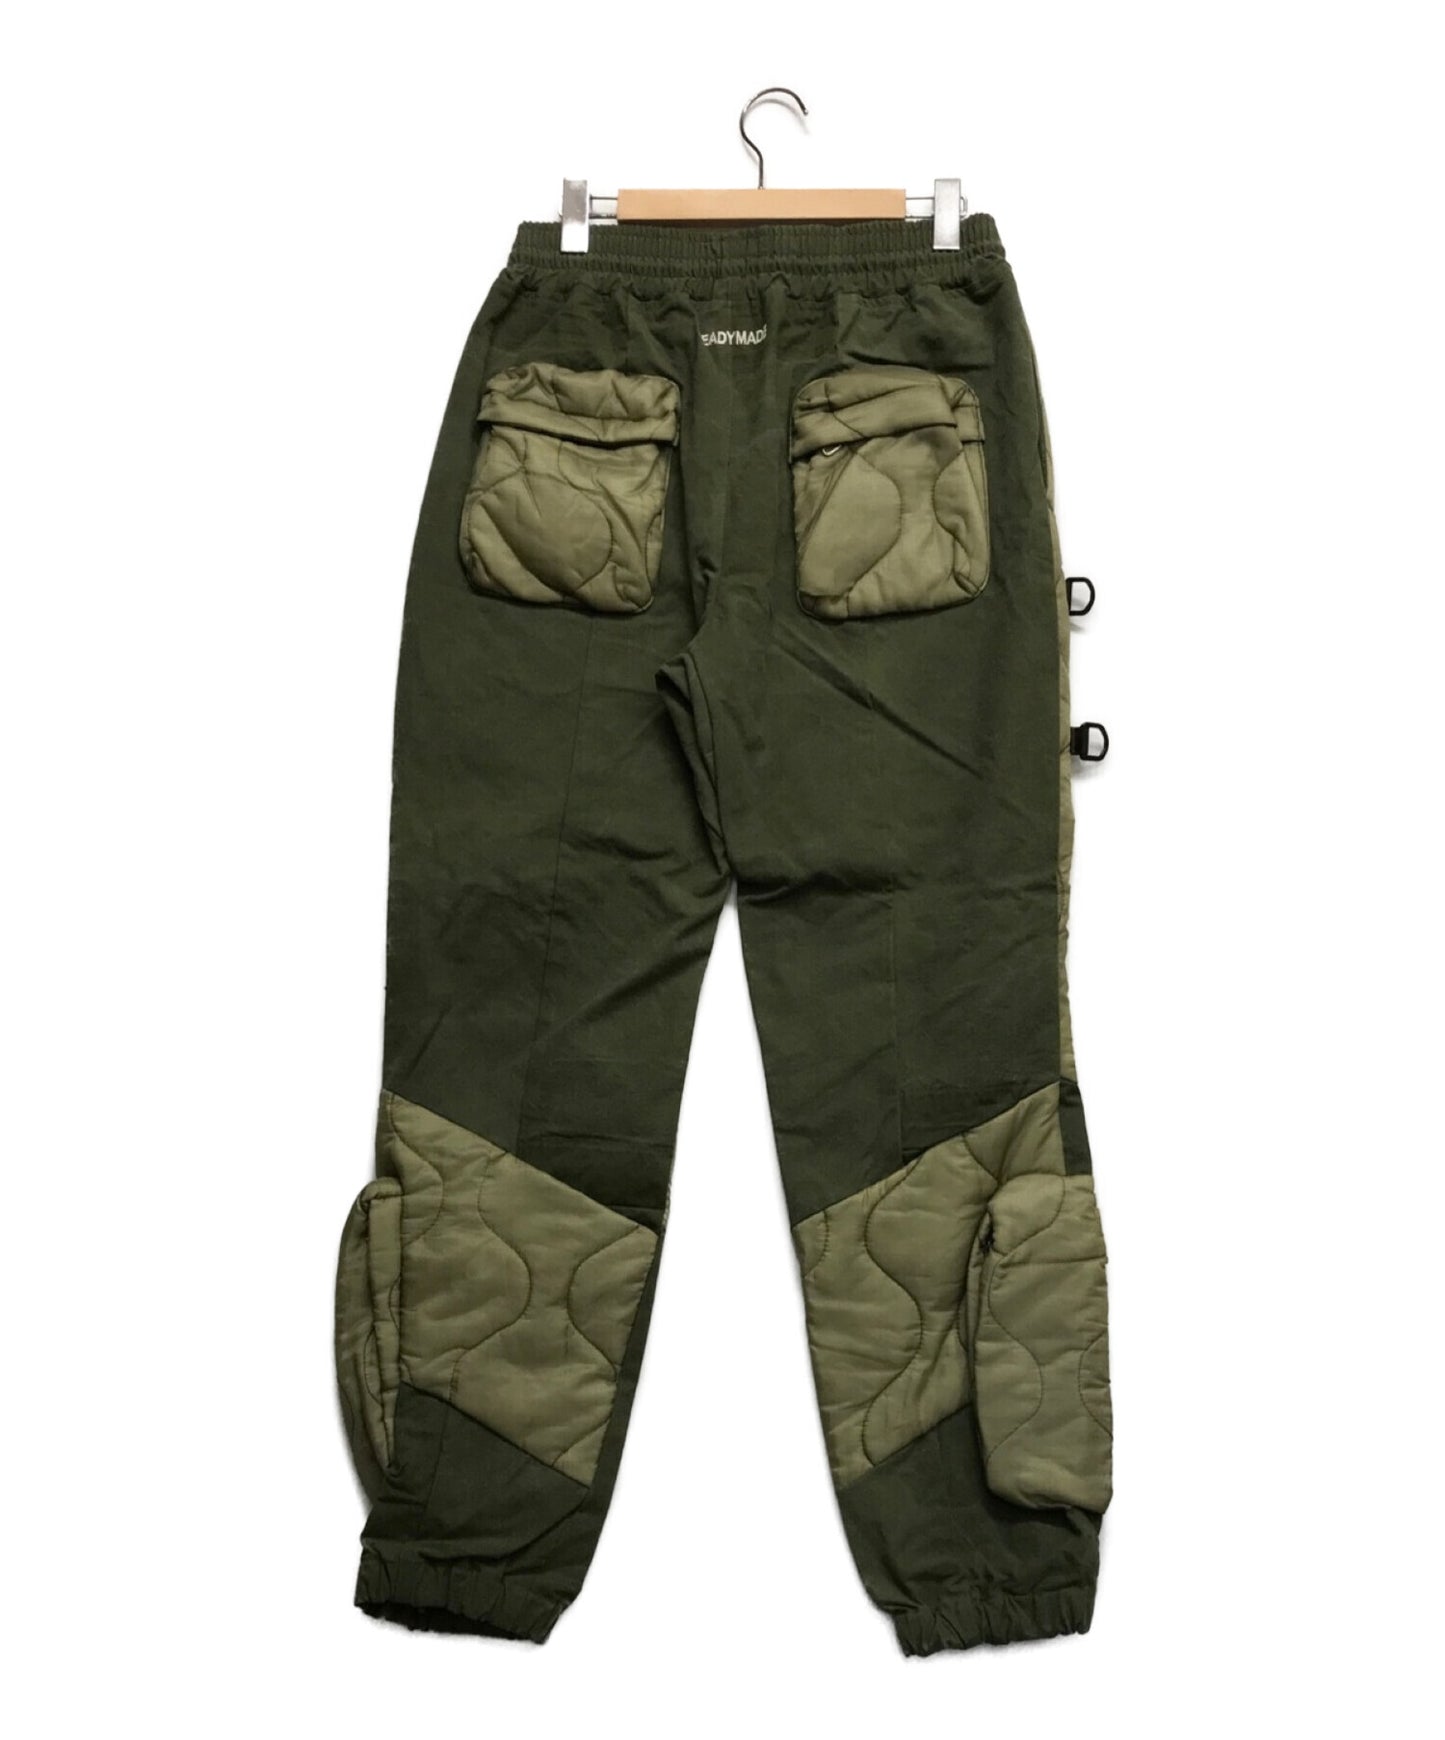 Readymade Liner กางเกงกางเกงขายาว re-co-kh-00-00-115